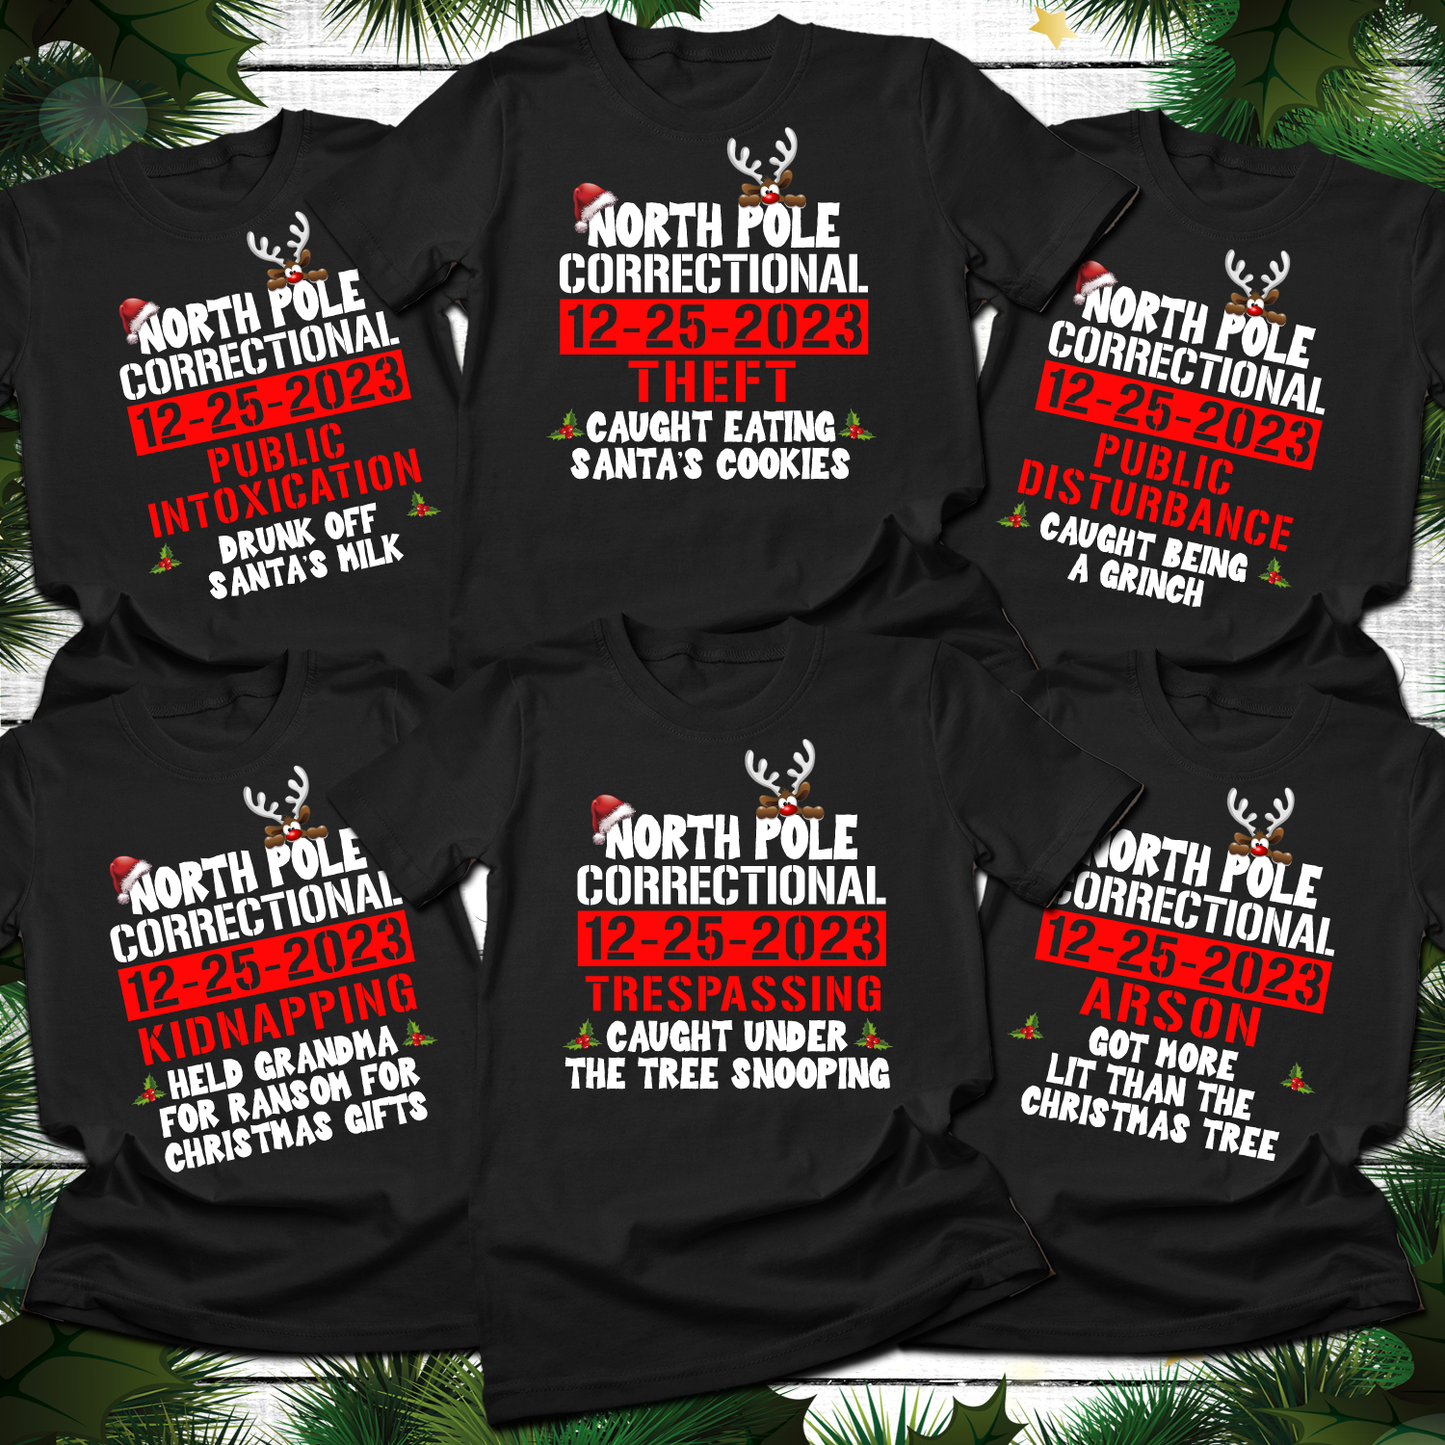 North Pole Christmas Matching Family Tshirt, Custom North Pole Correctional Christmas Shirt, Funny Group Christmas Shirt, North Pole Tee - Wilson Design Group